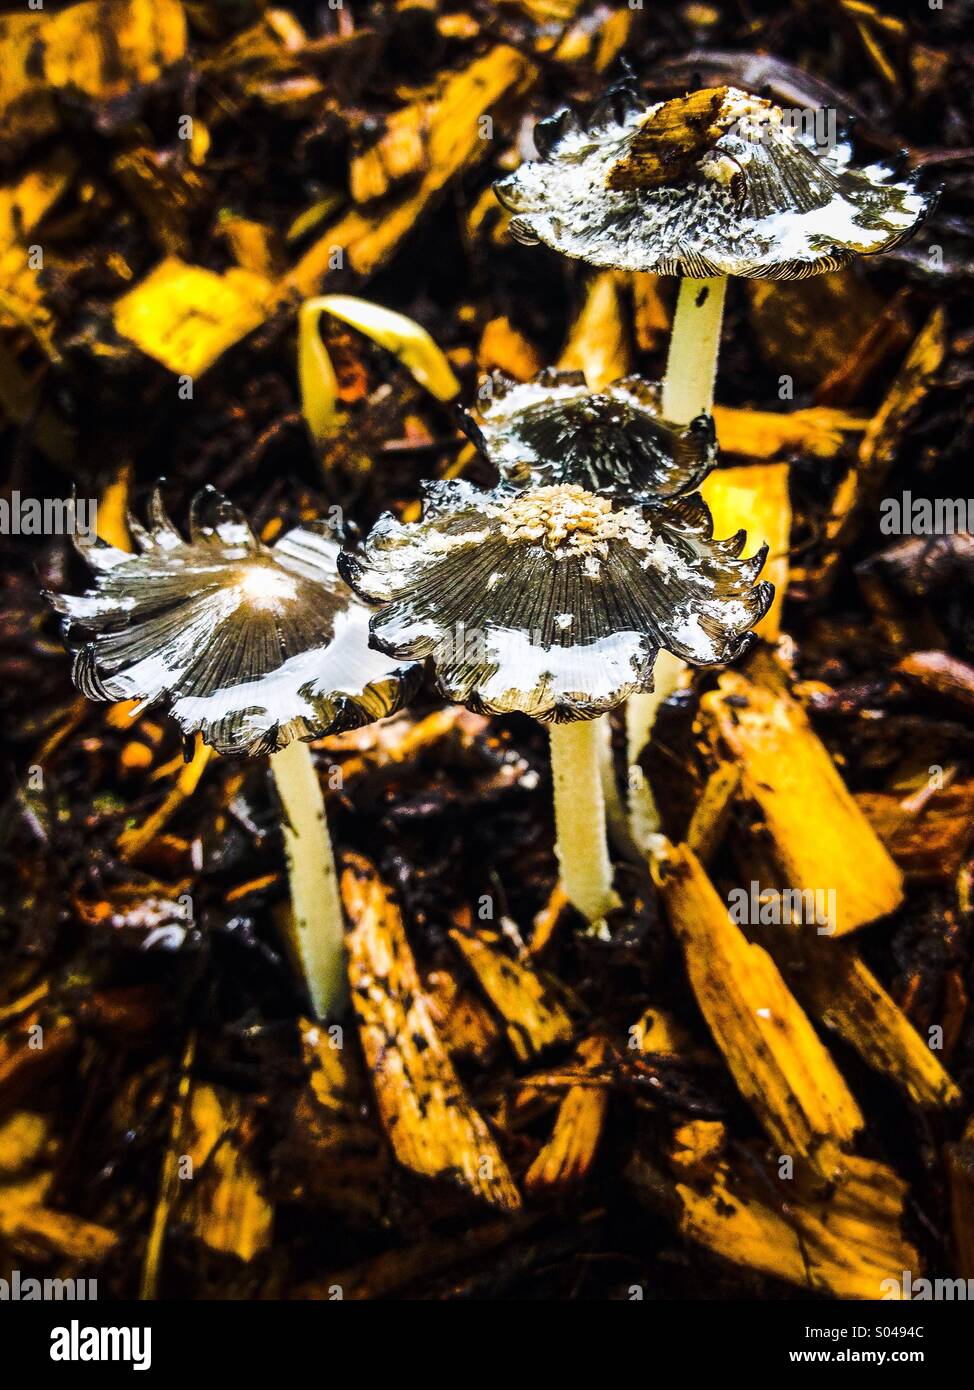 Mushrooms growing in wood bark chips Stock Photo